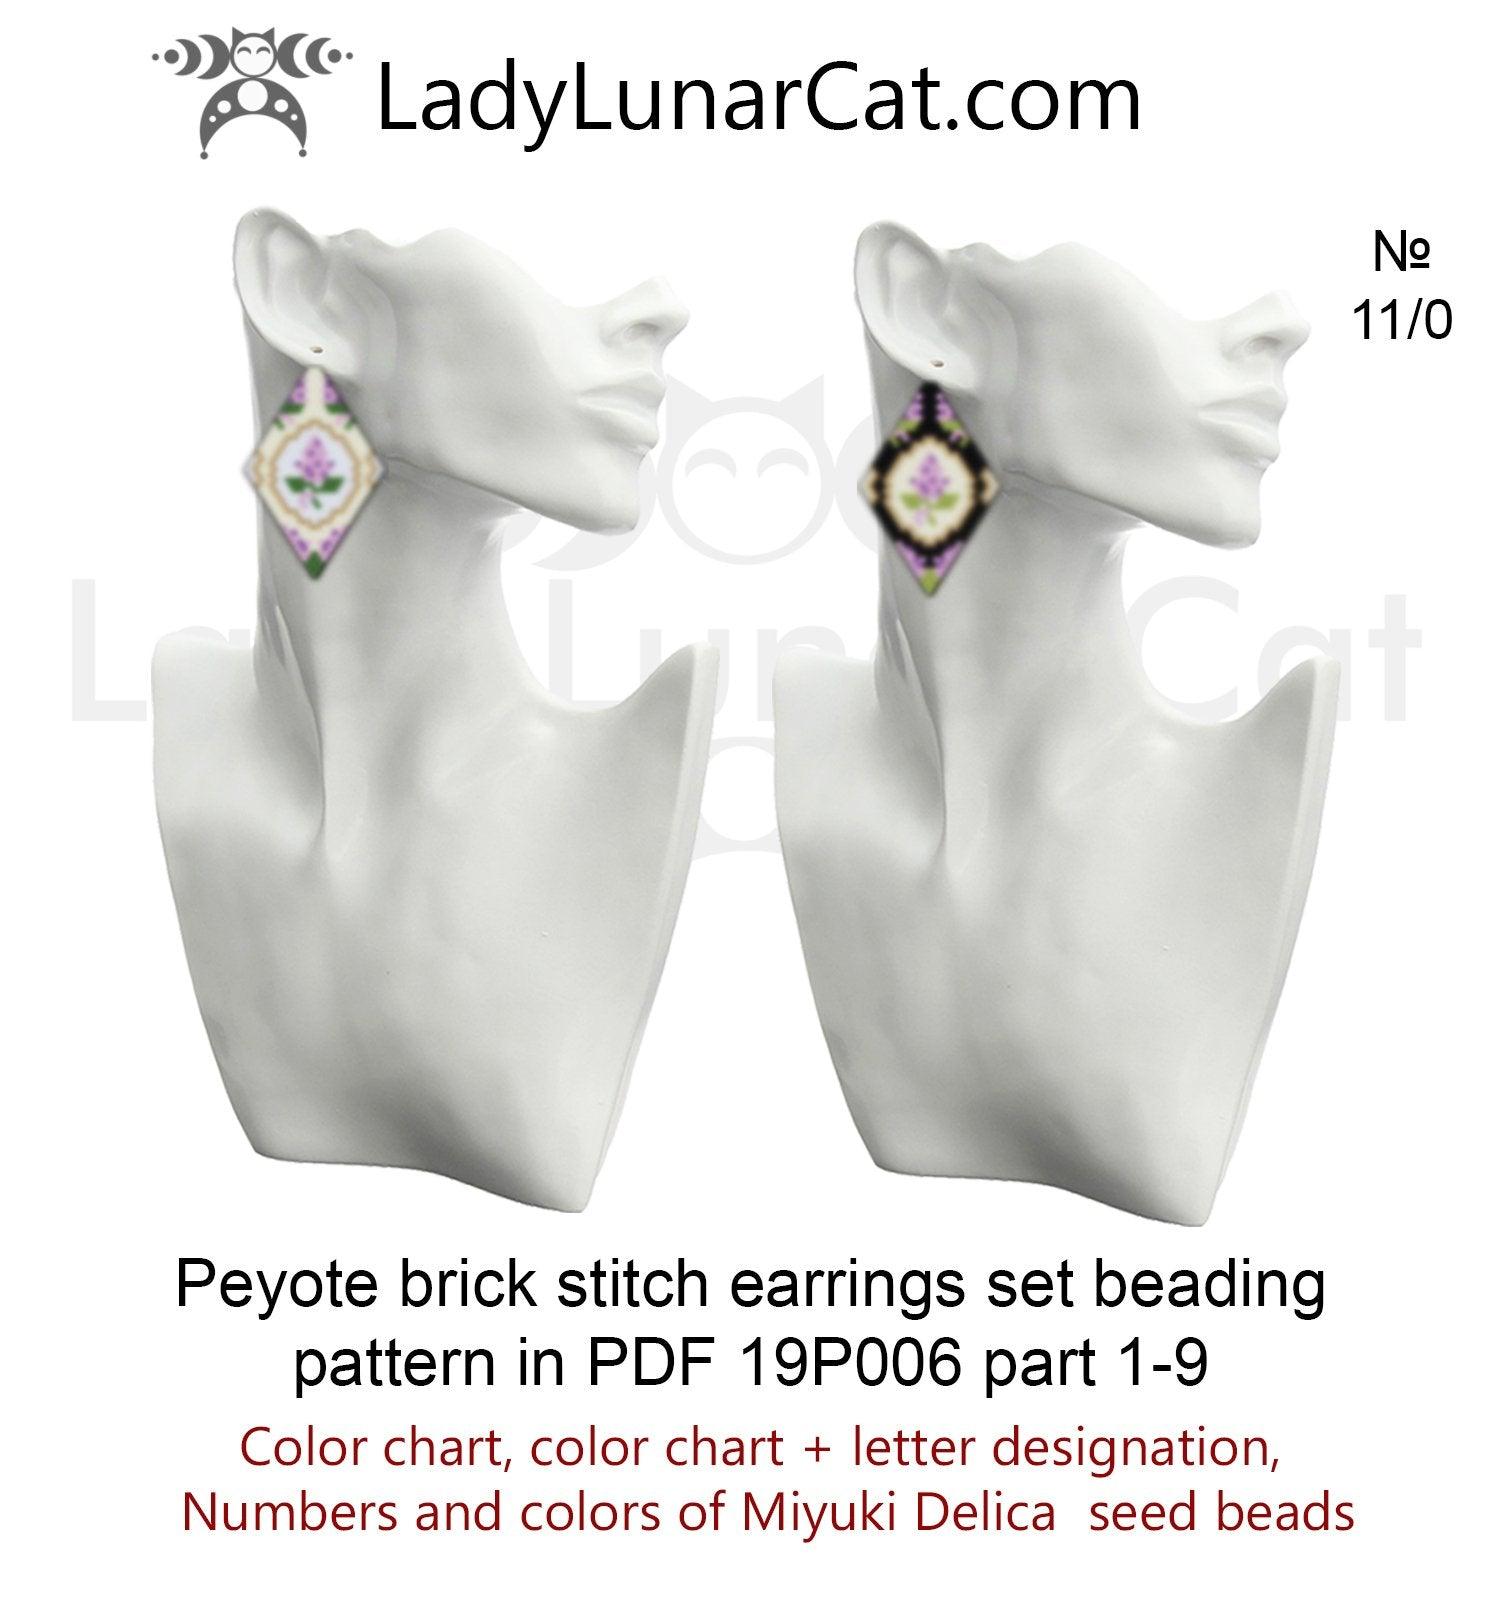 Lilac vintage flowers brick stitch beading earrings set pattern19P006 LadyLunarCat